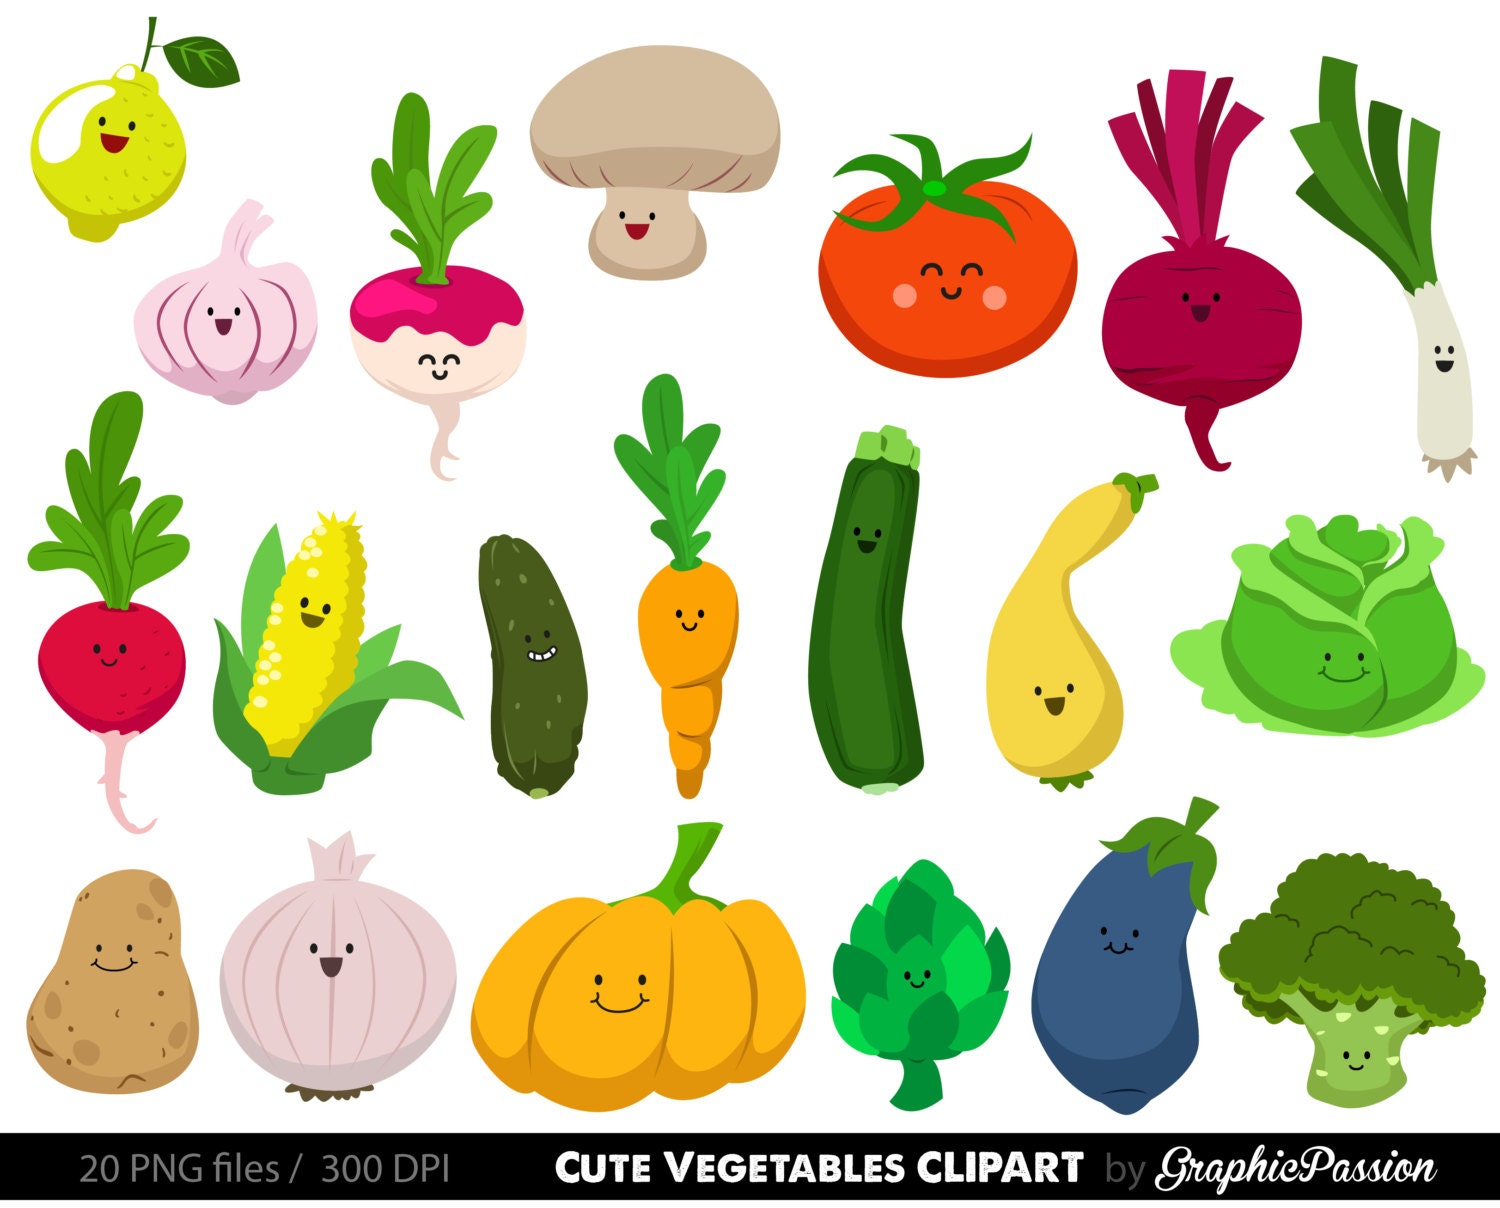 Vegetables clipart digital vegetables clip art by ...
